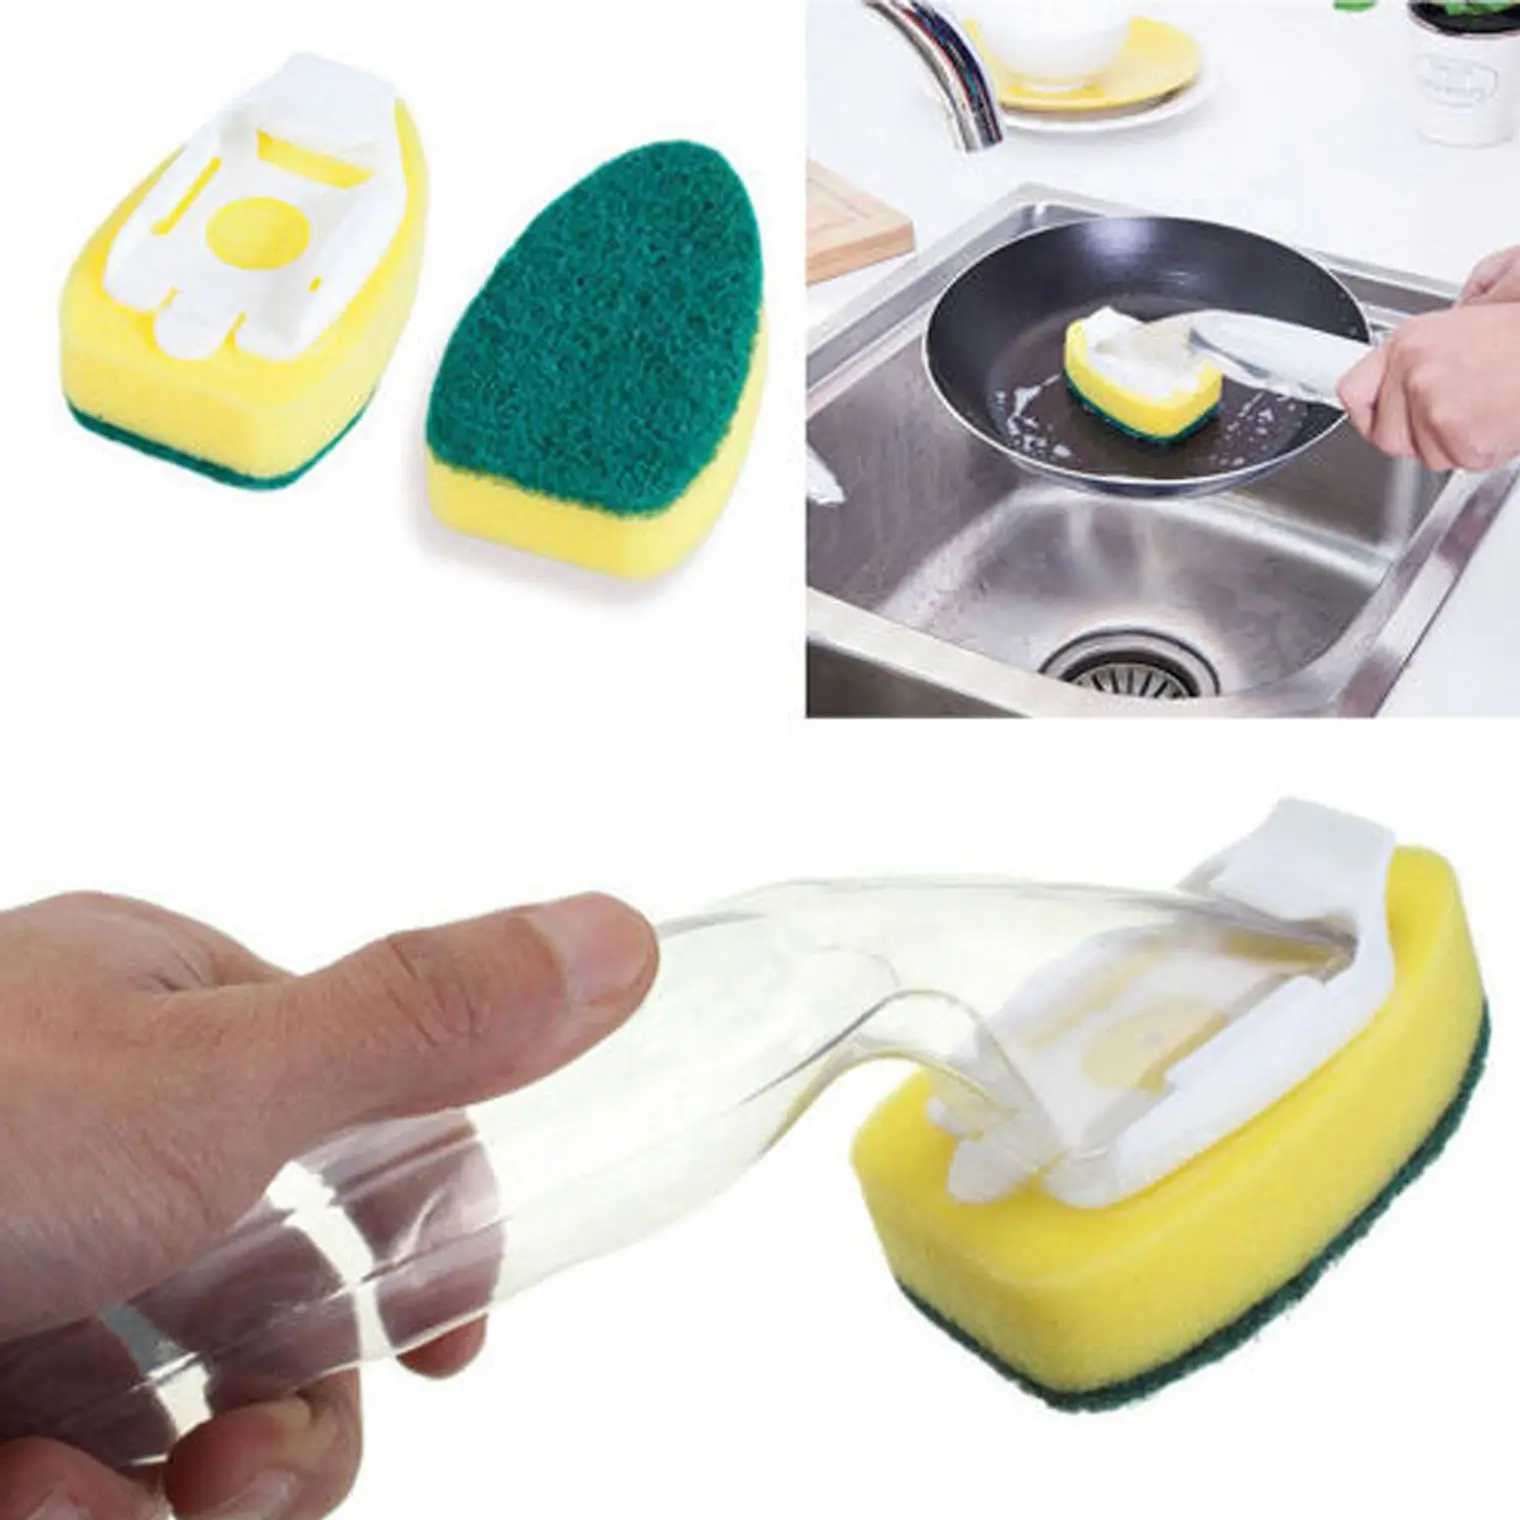 https://ae01.alicdn.com/kf/H32fe07114c2d438491c682b37ead5b2eJ/1set-Kitchen-Sponge-Cleaning-Brush-With-Refill-Liquid-Handle-Scouring-Pad-Sponge-Brush-Dispenser-Dish-Scrubber.jpg